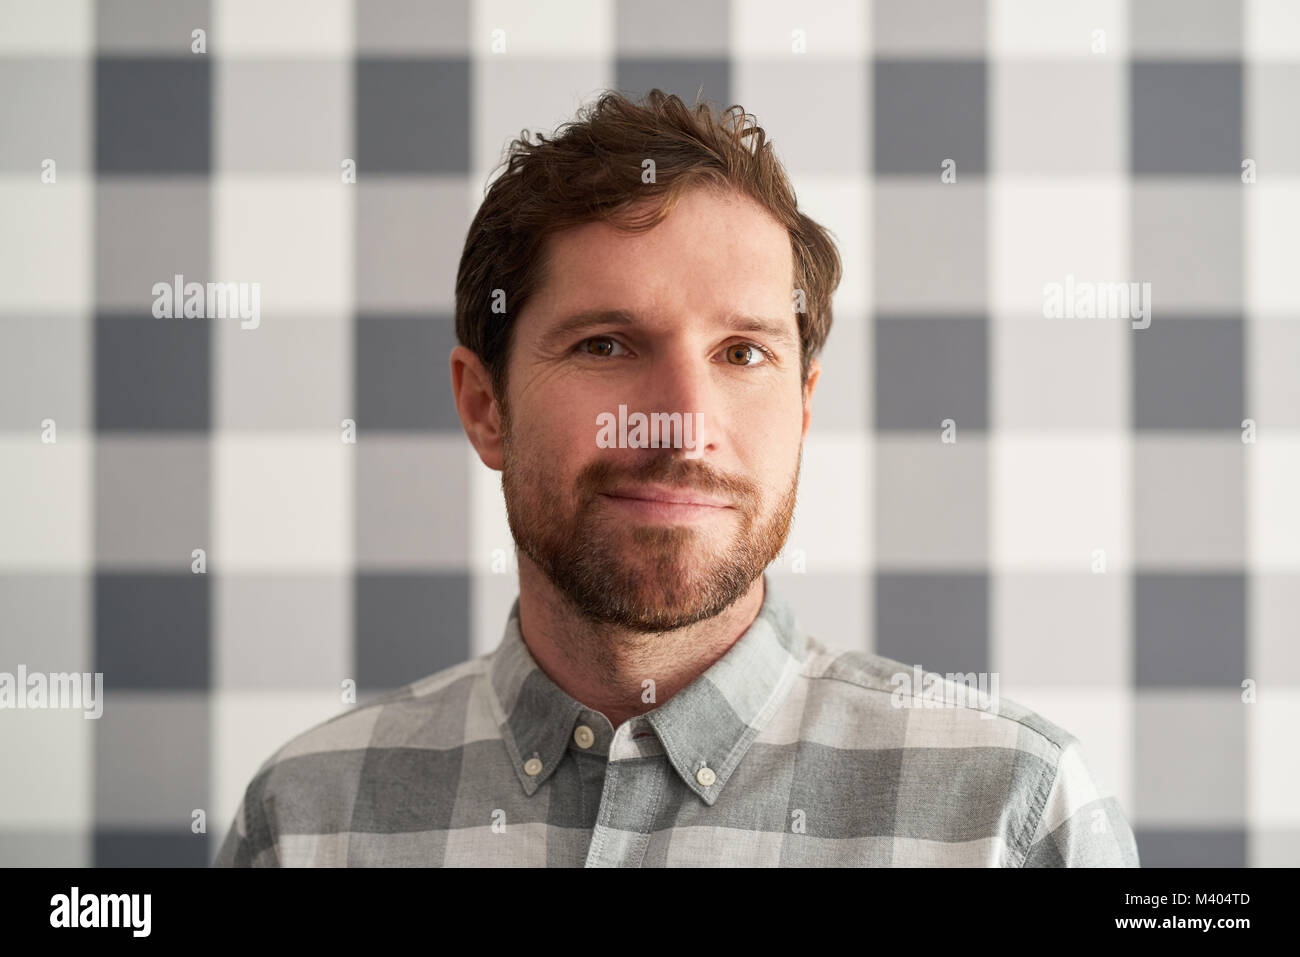 Smiling young man wearing a shirt matching his checkered wallpaper Stock Photo